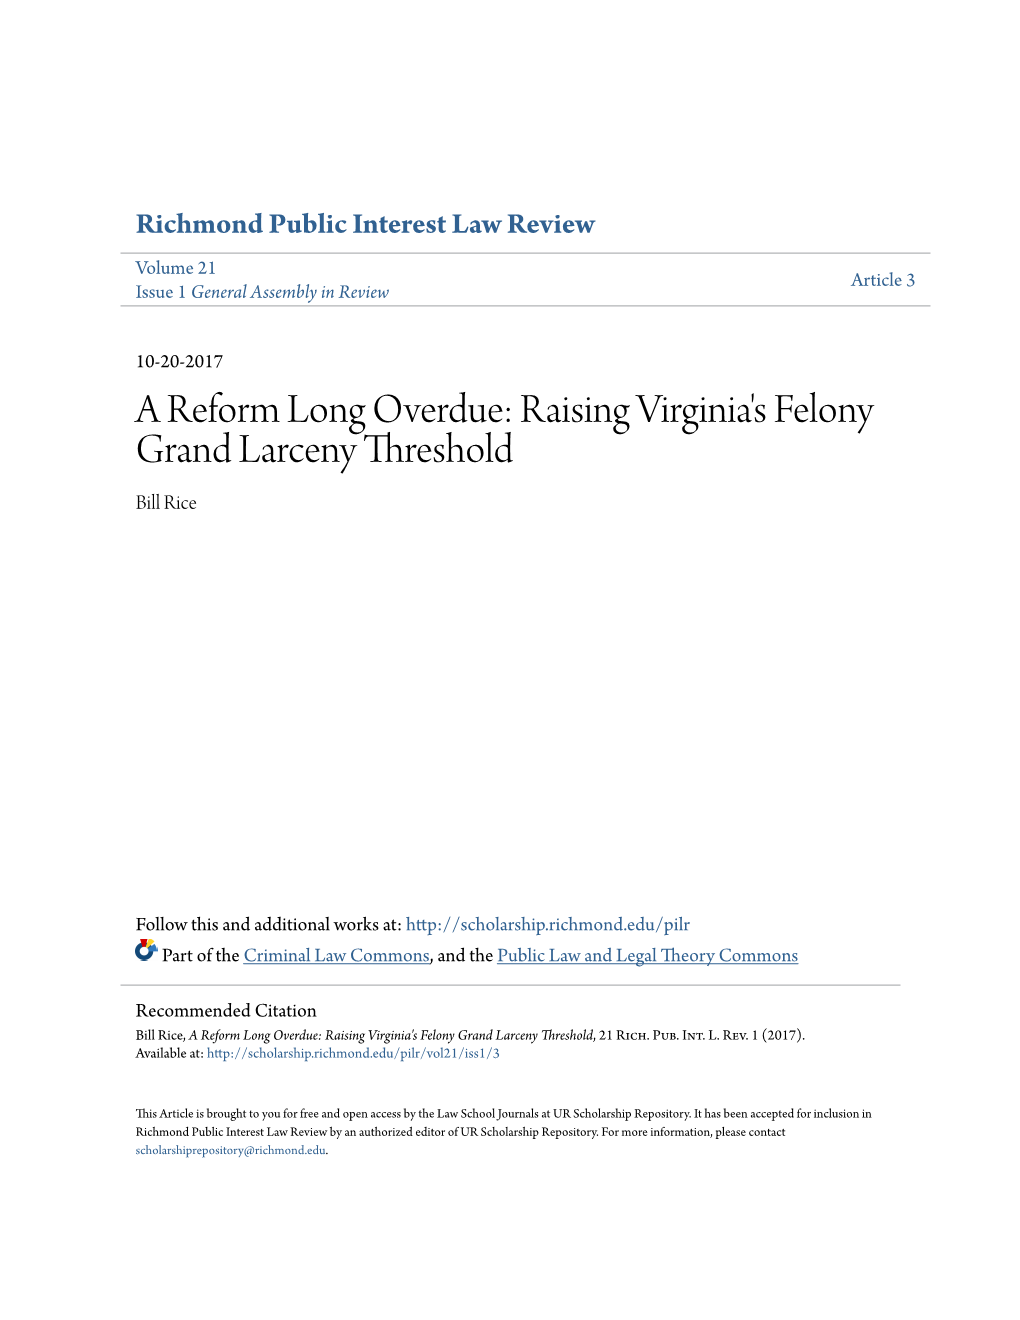 Raising Virginia's Felony Grand Larceny Threshold Bill Rice